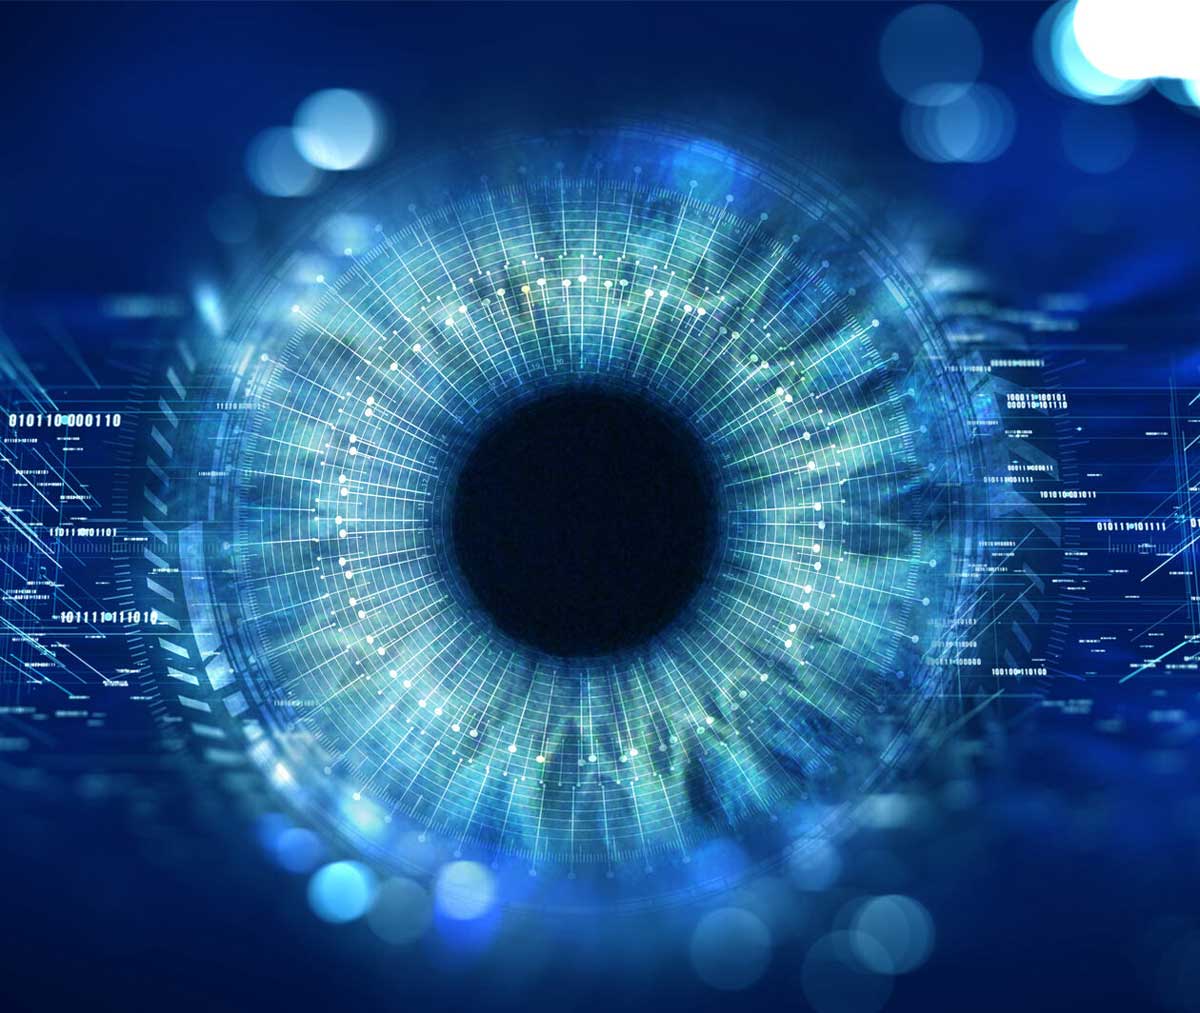 Digital representation of the iris of an eye